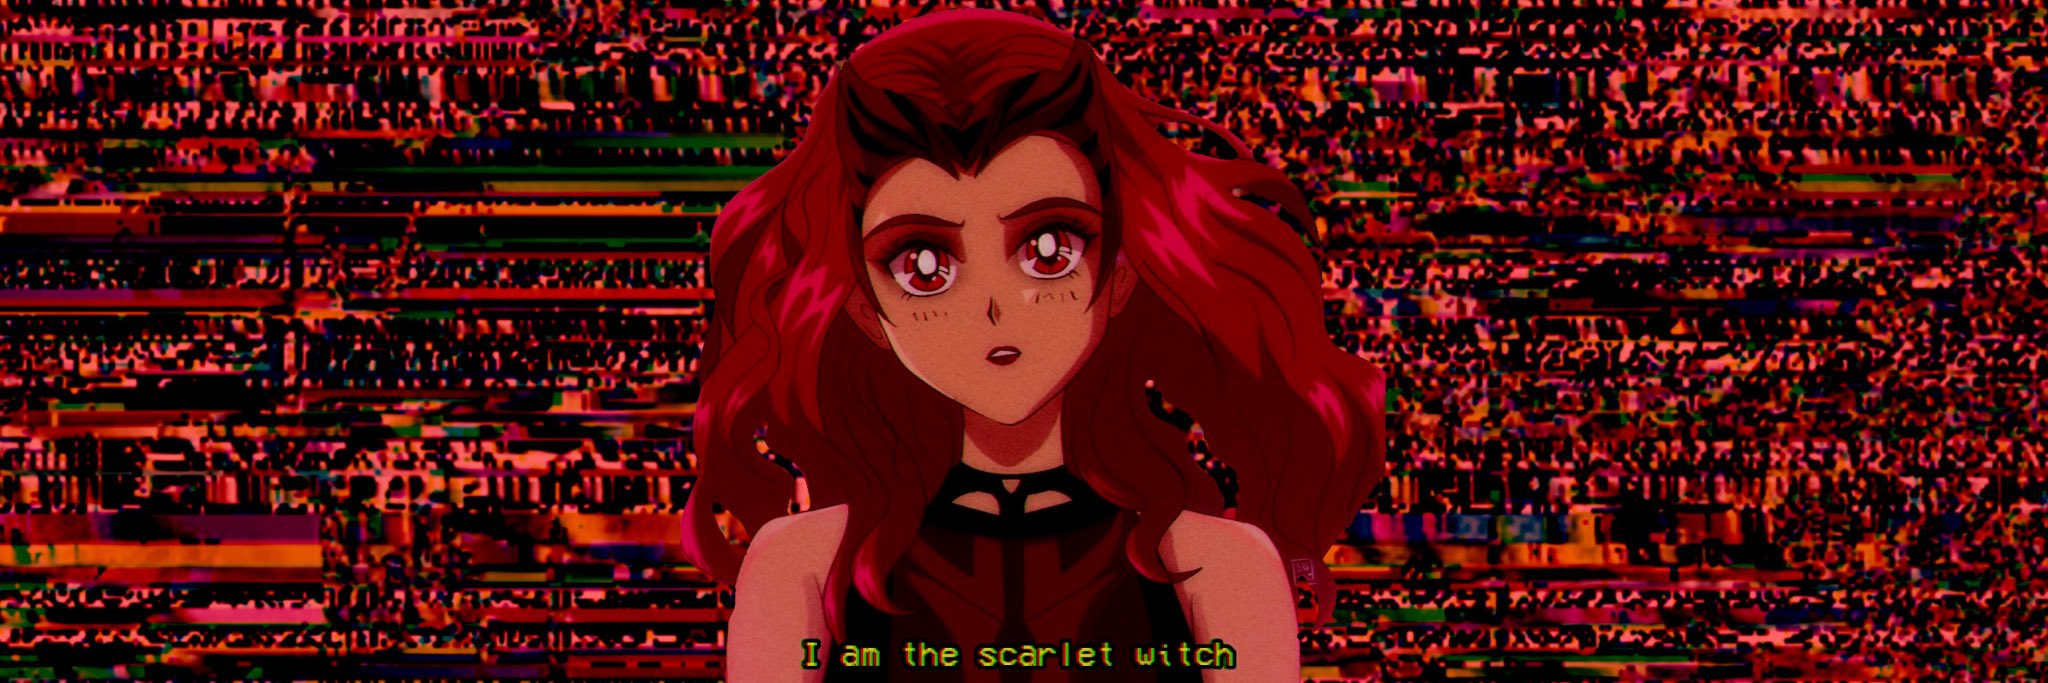 Wanda Maximoff  Scarlet Witch  page 2 of 3  Zerochan Anime Image Board  Mobile